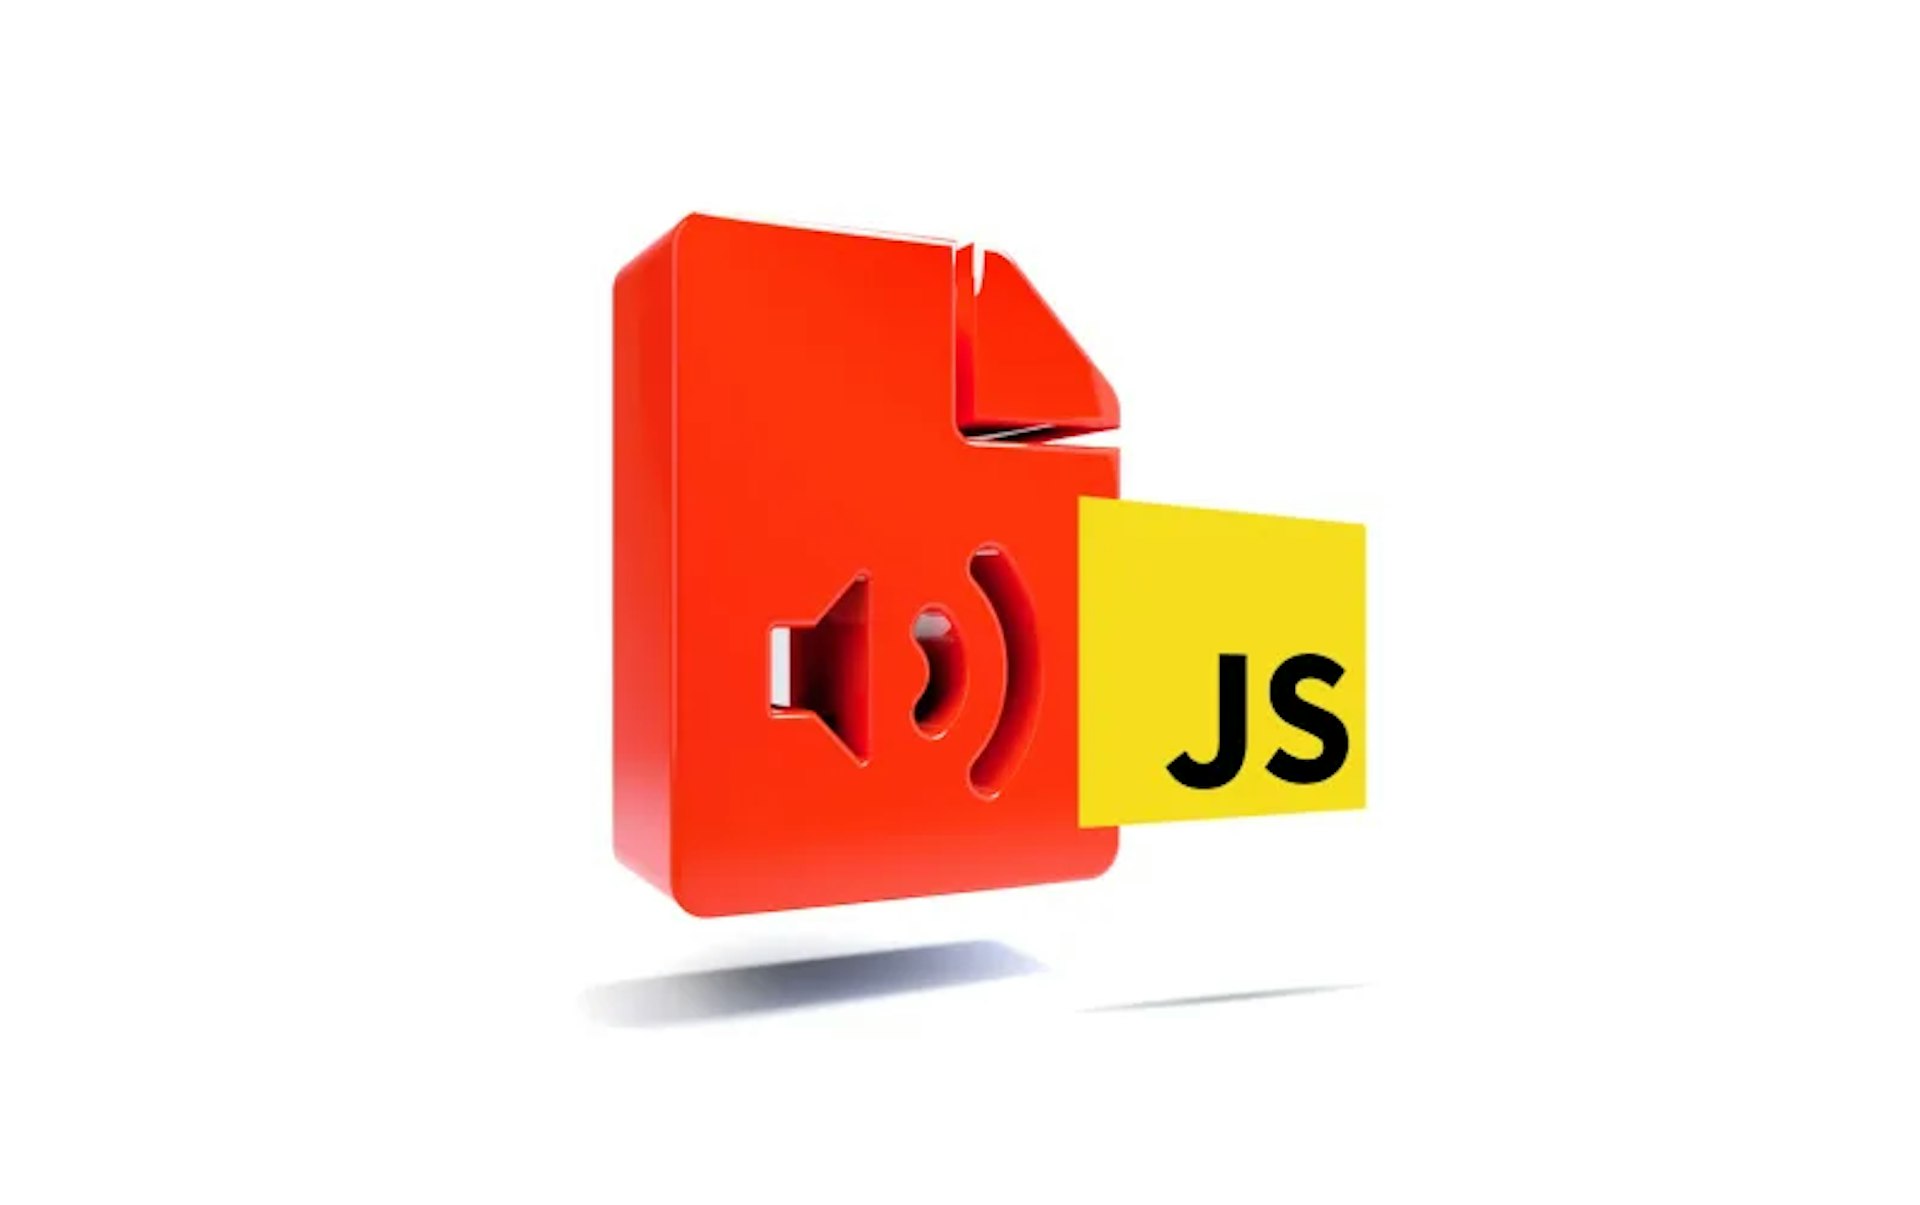 Sending Audio Files to Your Express.js Server